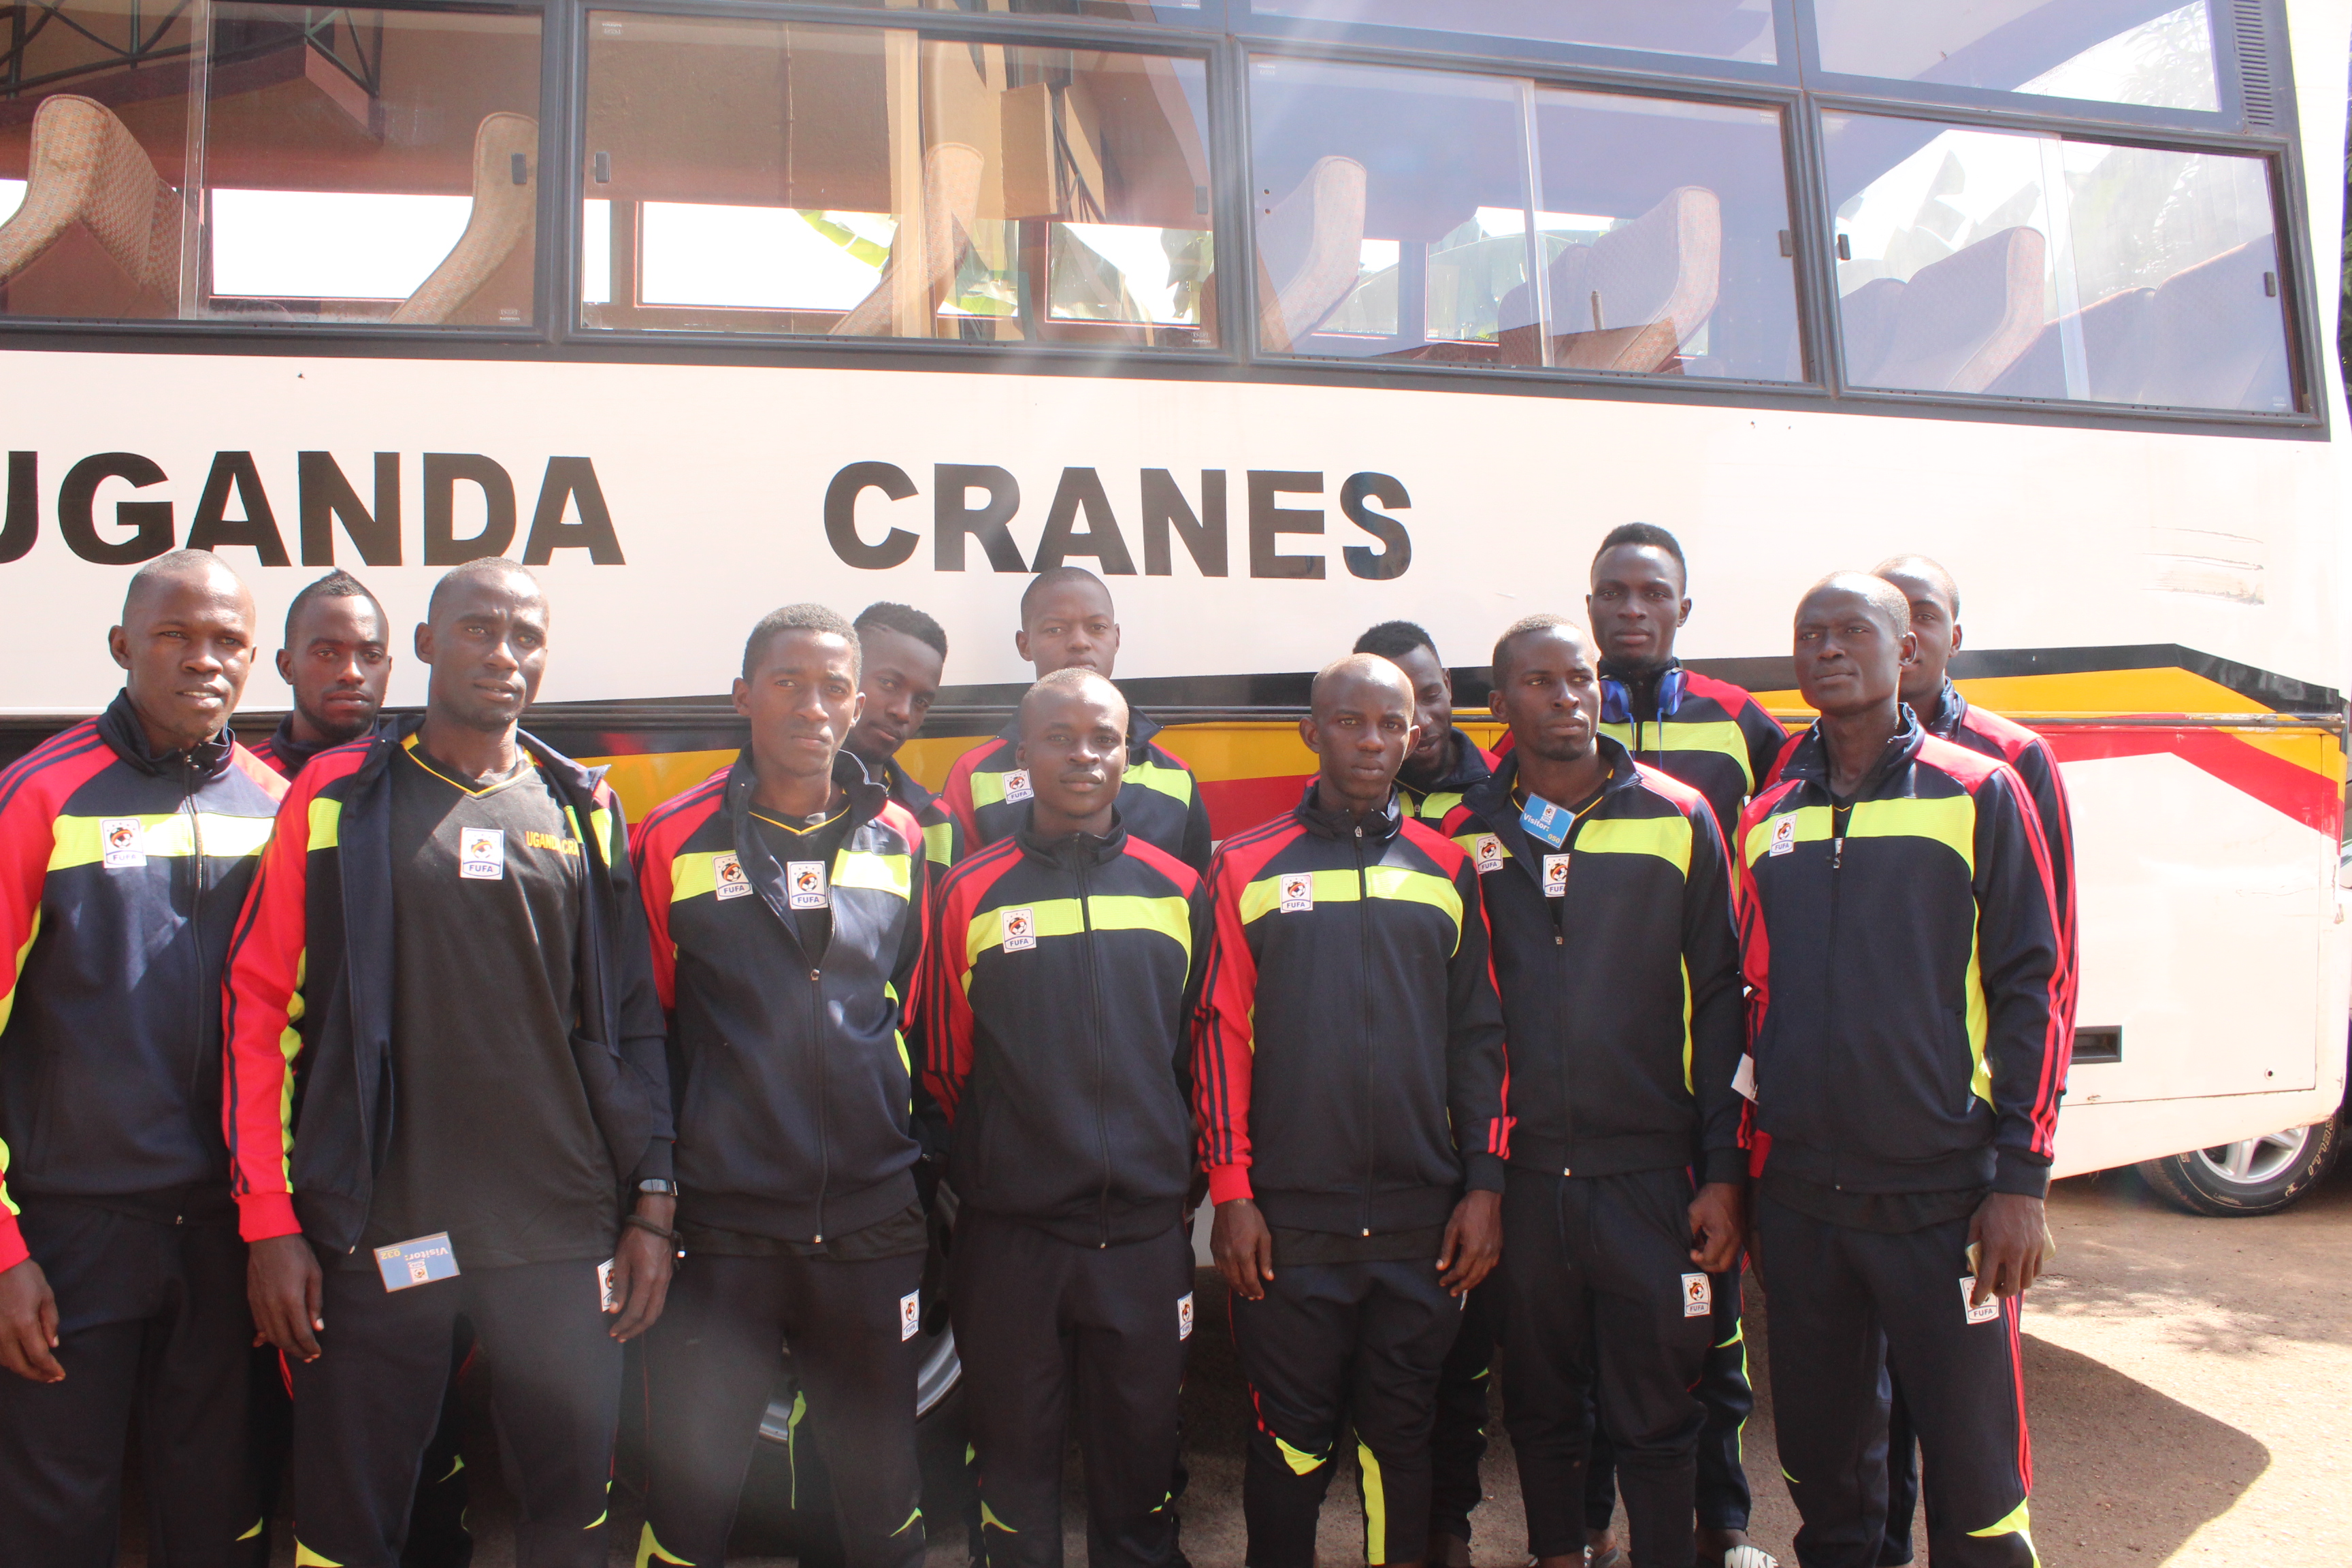 The Uganda Sand Cranes players